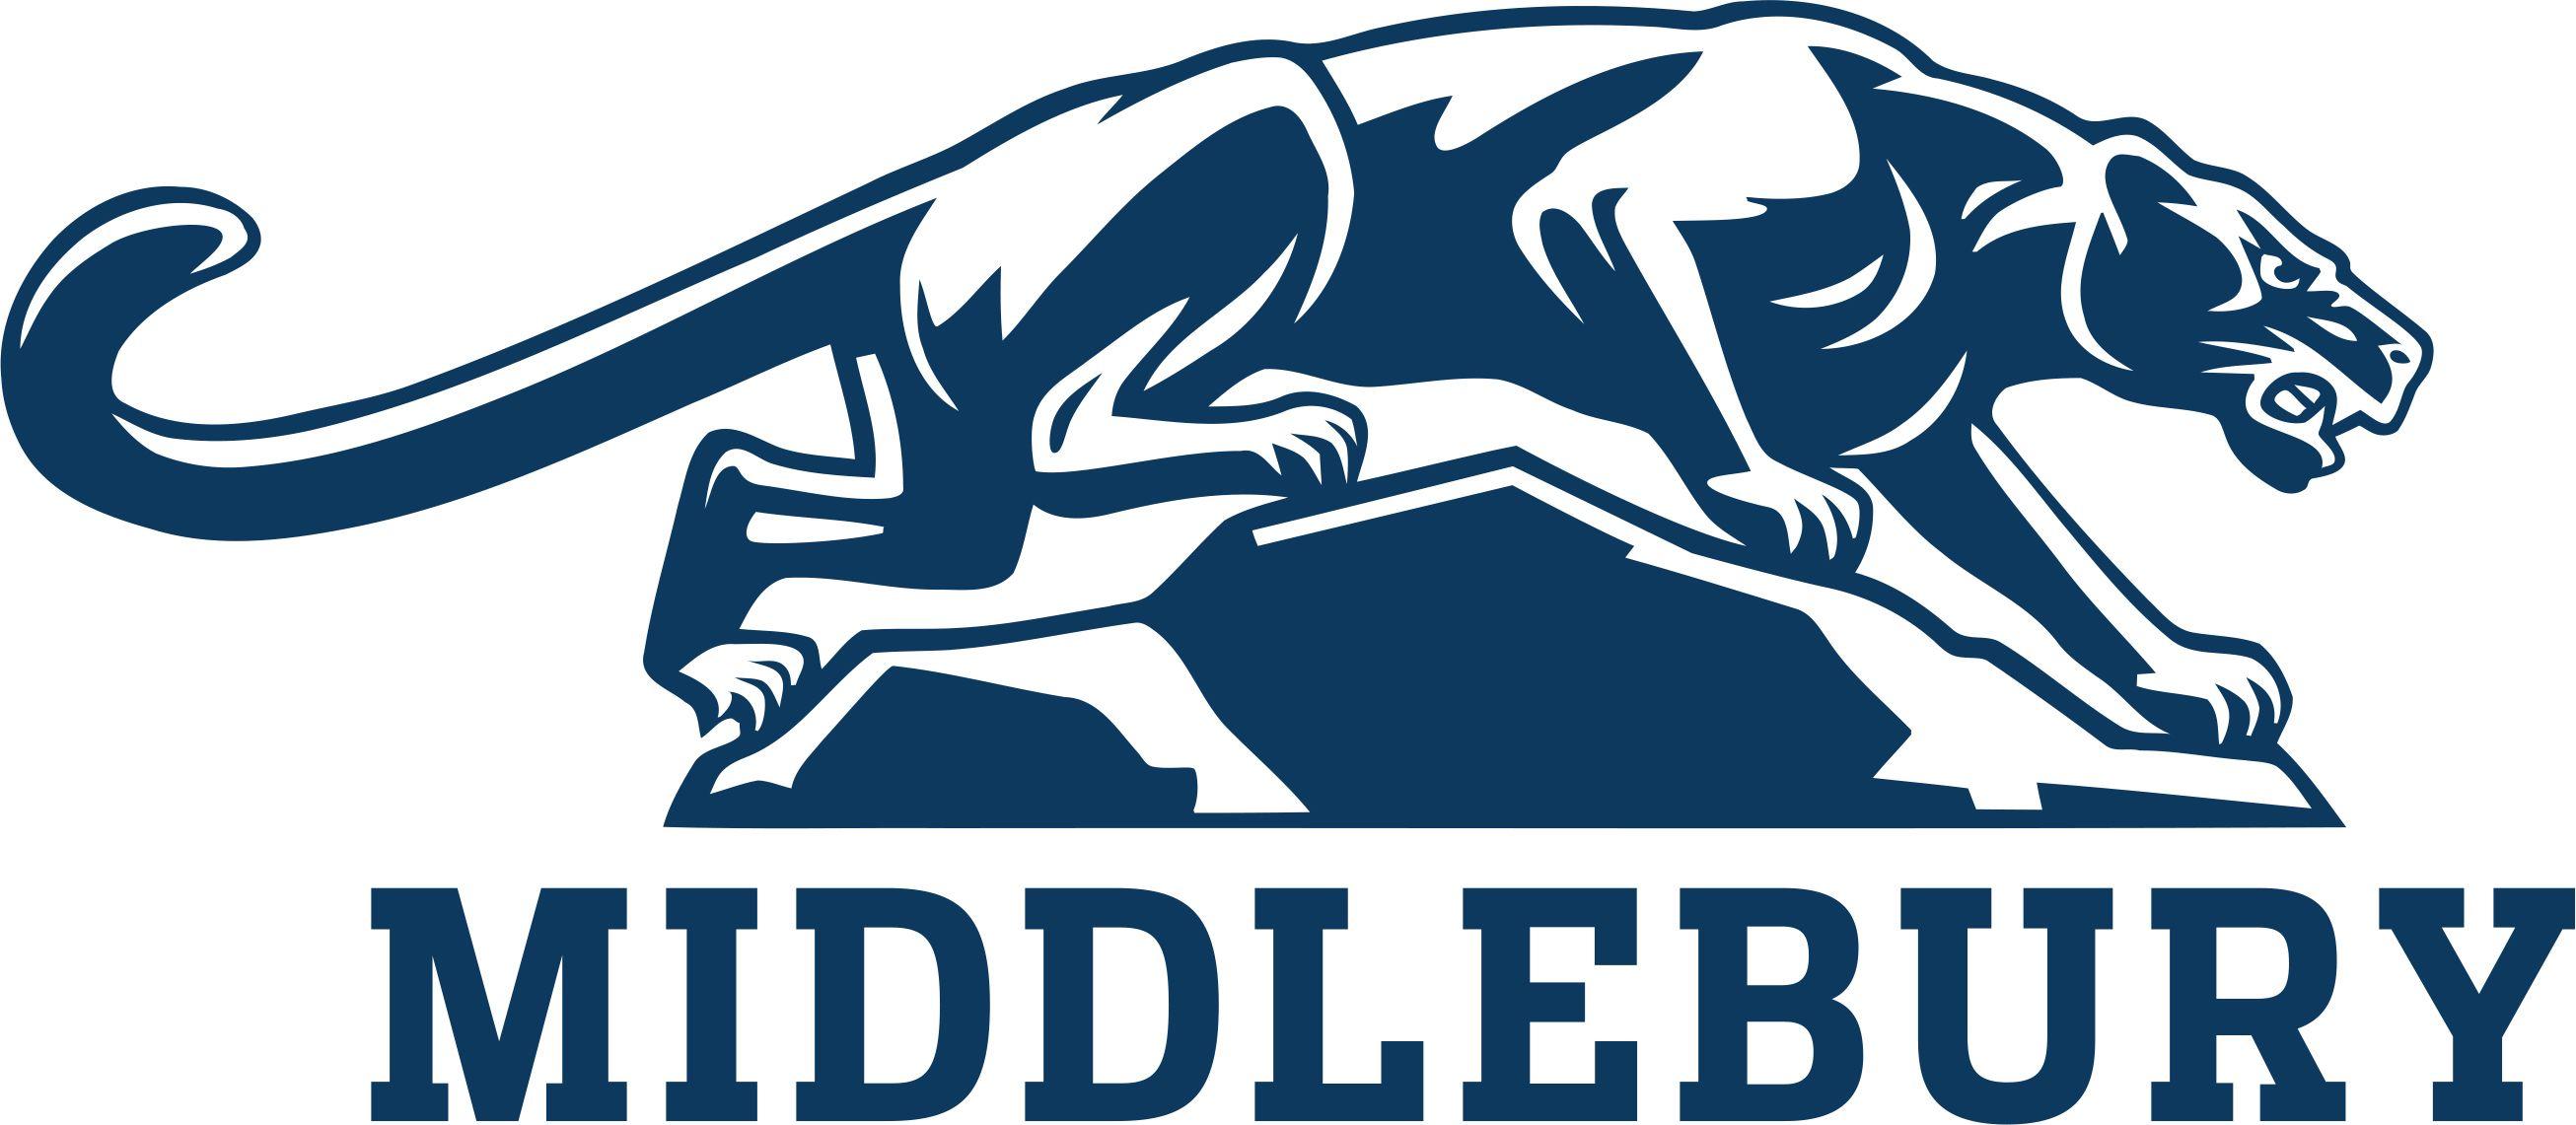 Middlebury College Logo - Welcome to collegehockeystats.net